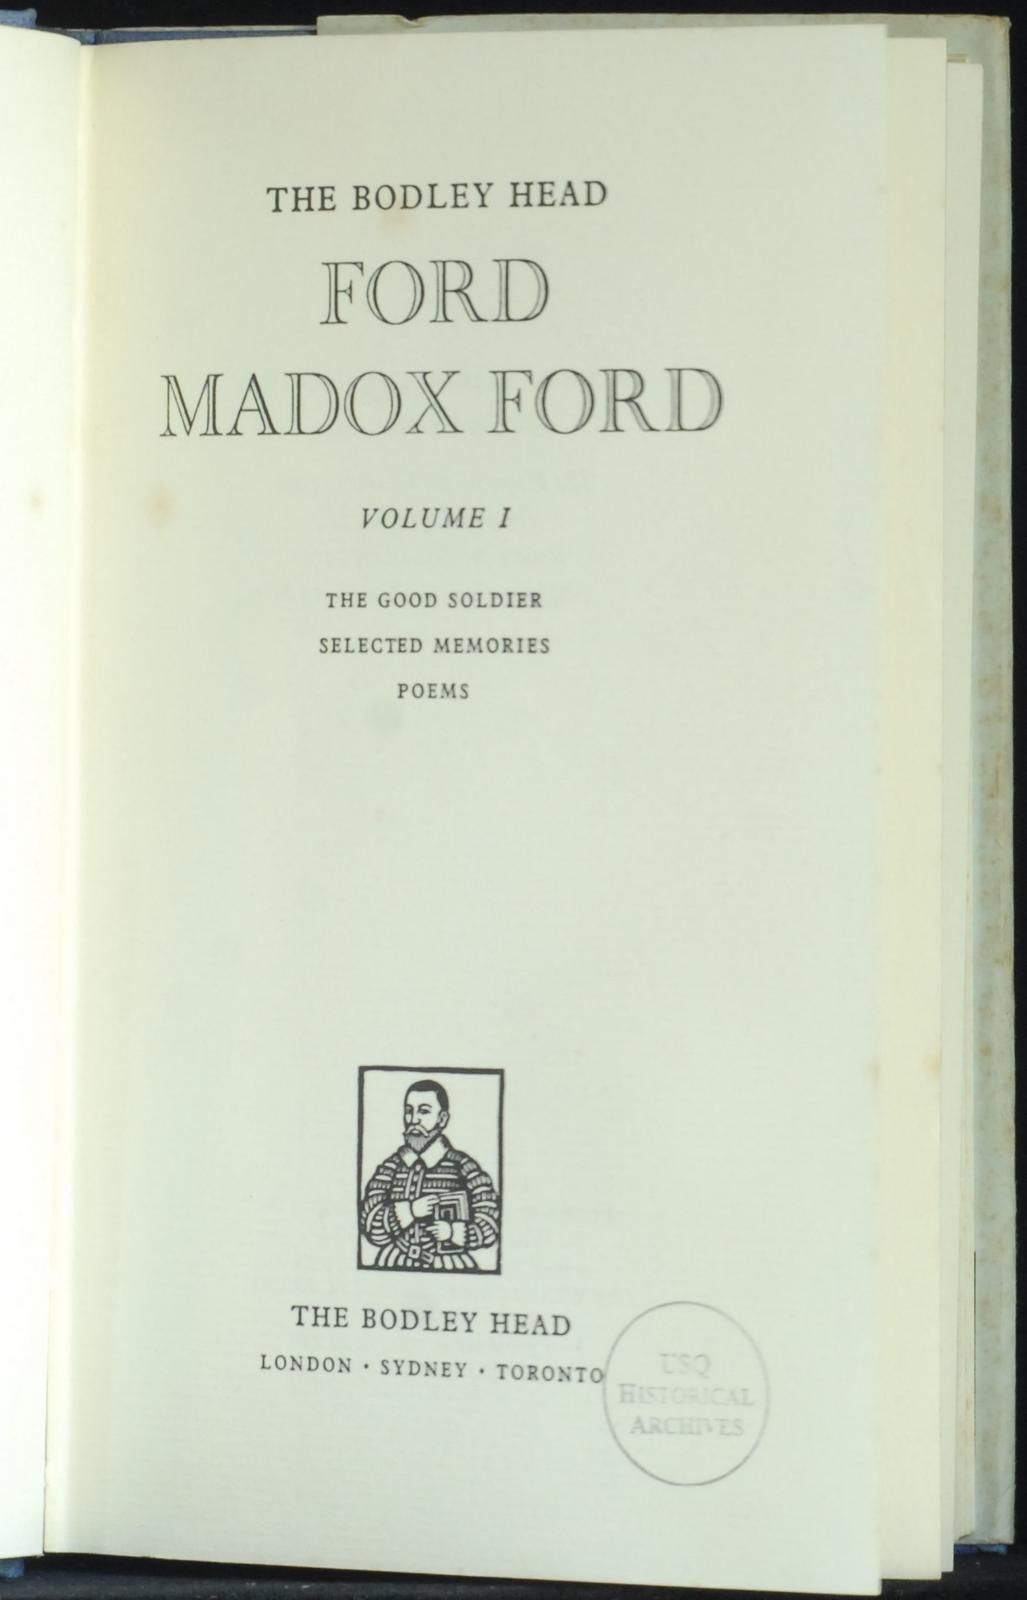 mbb006859b_-_Madox_Ford_Ford_-_The_Bodley_Head_Ford_Madox_Ford_Volume_I.jpg